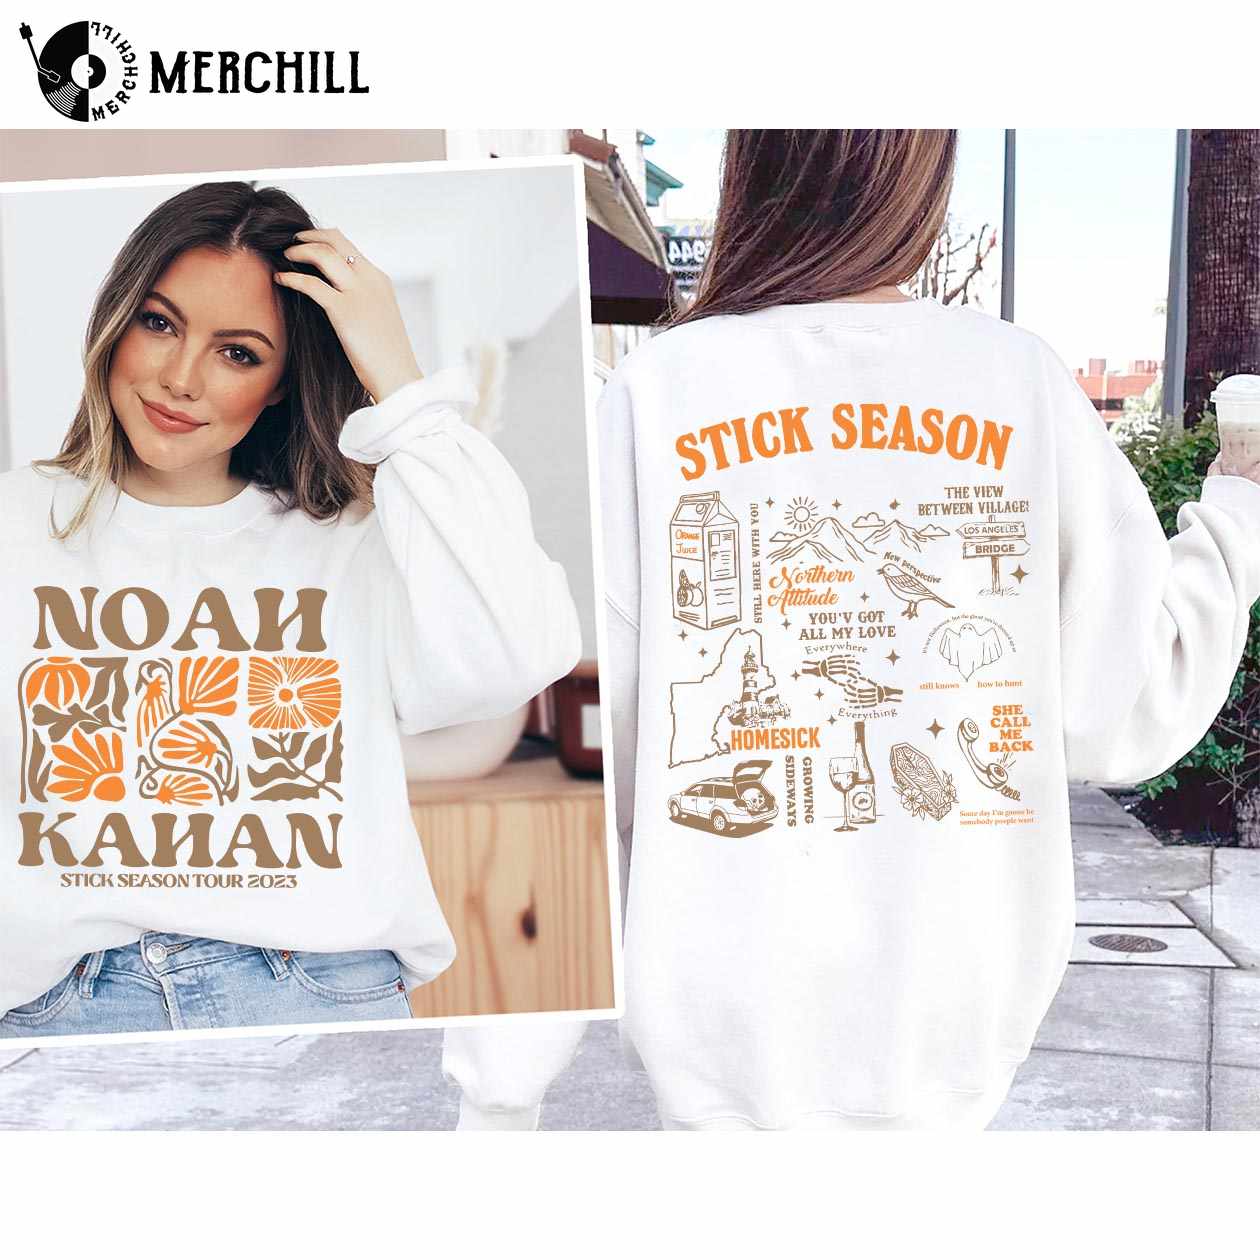 Official noah Kahan Everywhere Everything Shirt, hoodie, long